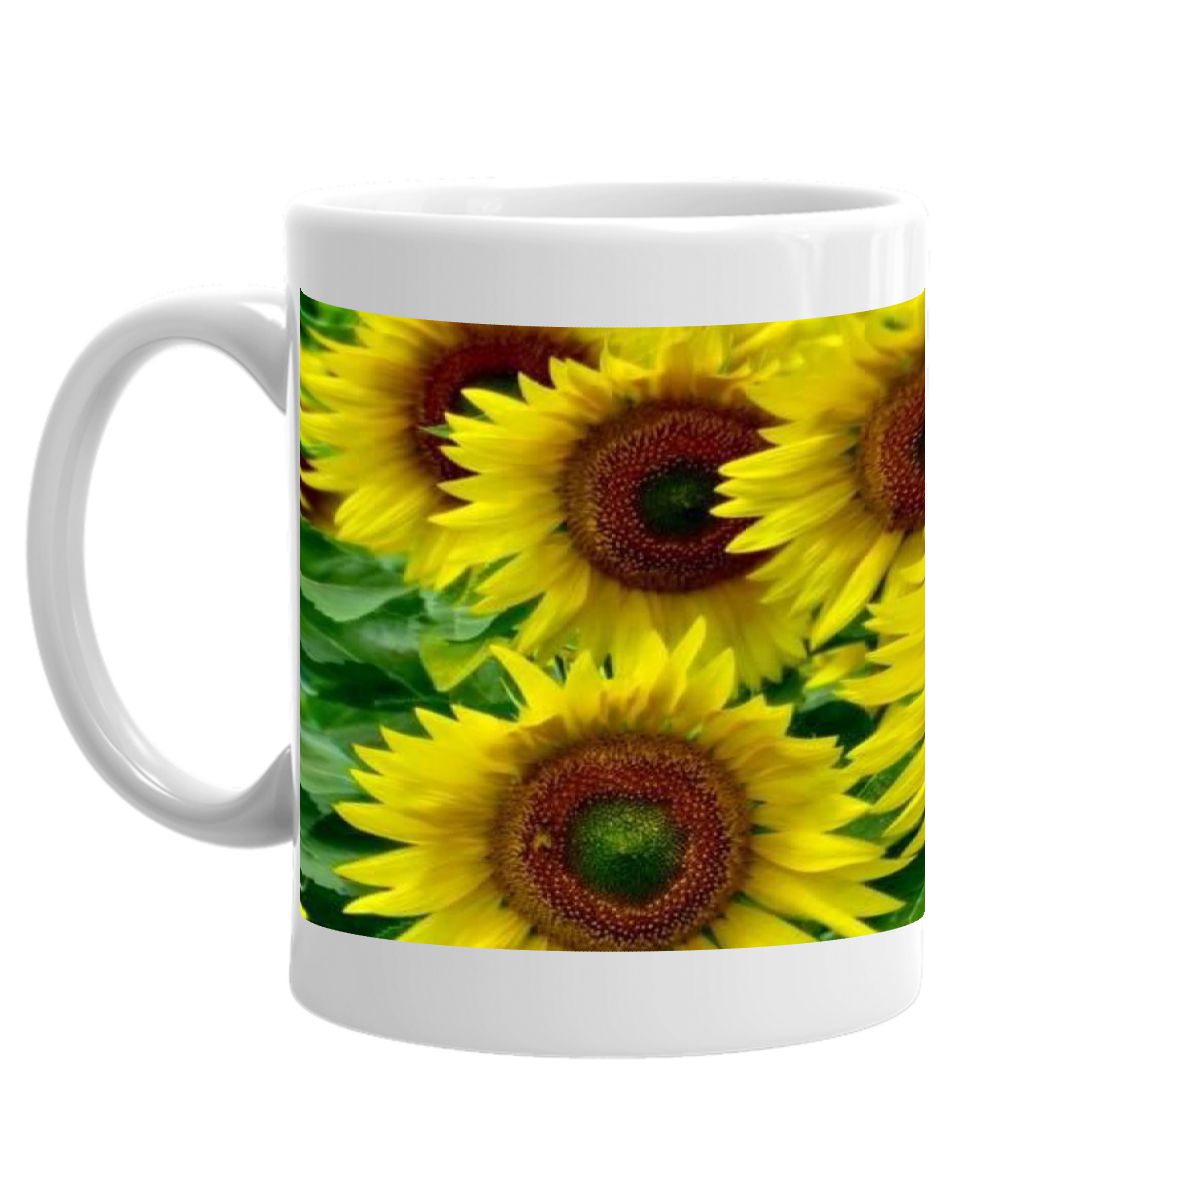 Sunflowers mug